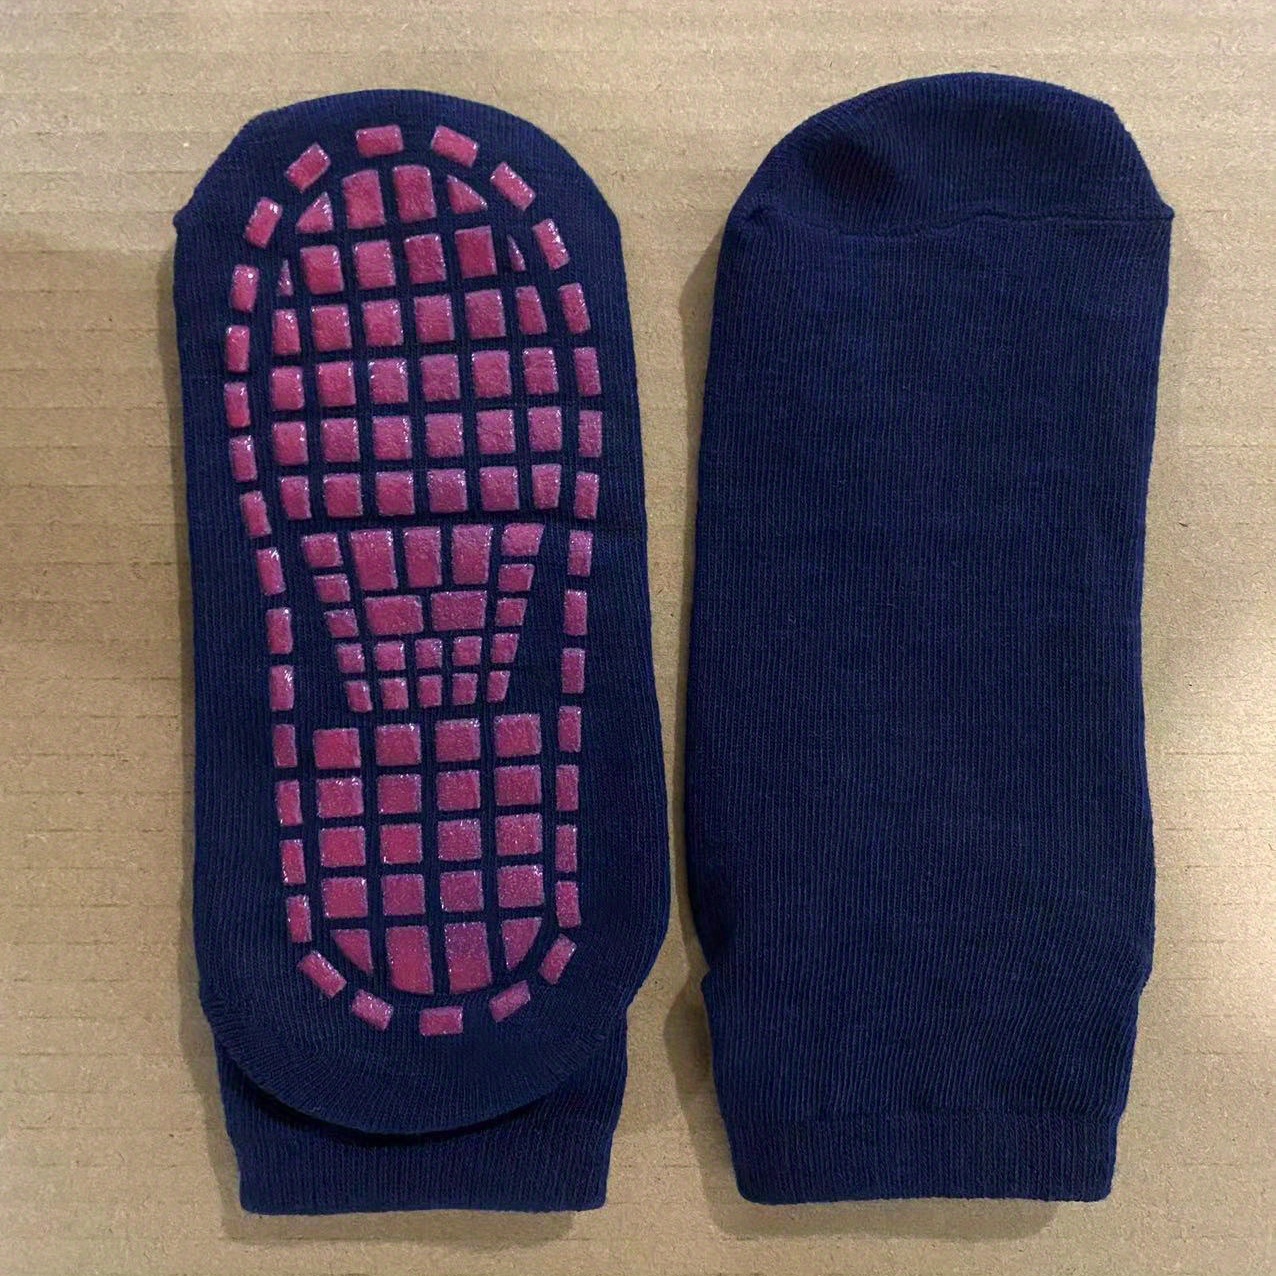 Women High Quality Pilates Socks Anti-Slip Breathable Backless Yoga Socks -  China Yoga Socks and Adult Non Slip Yoga Socks price